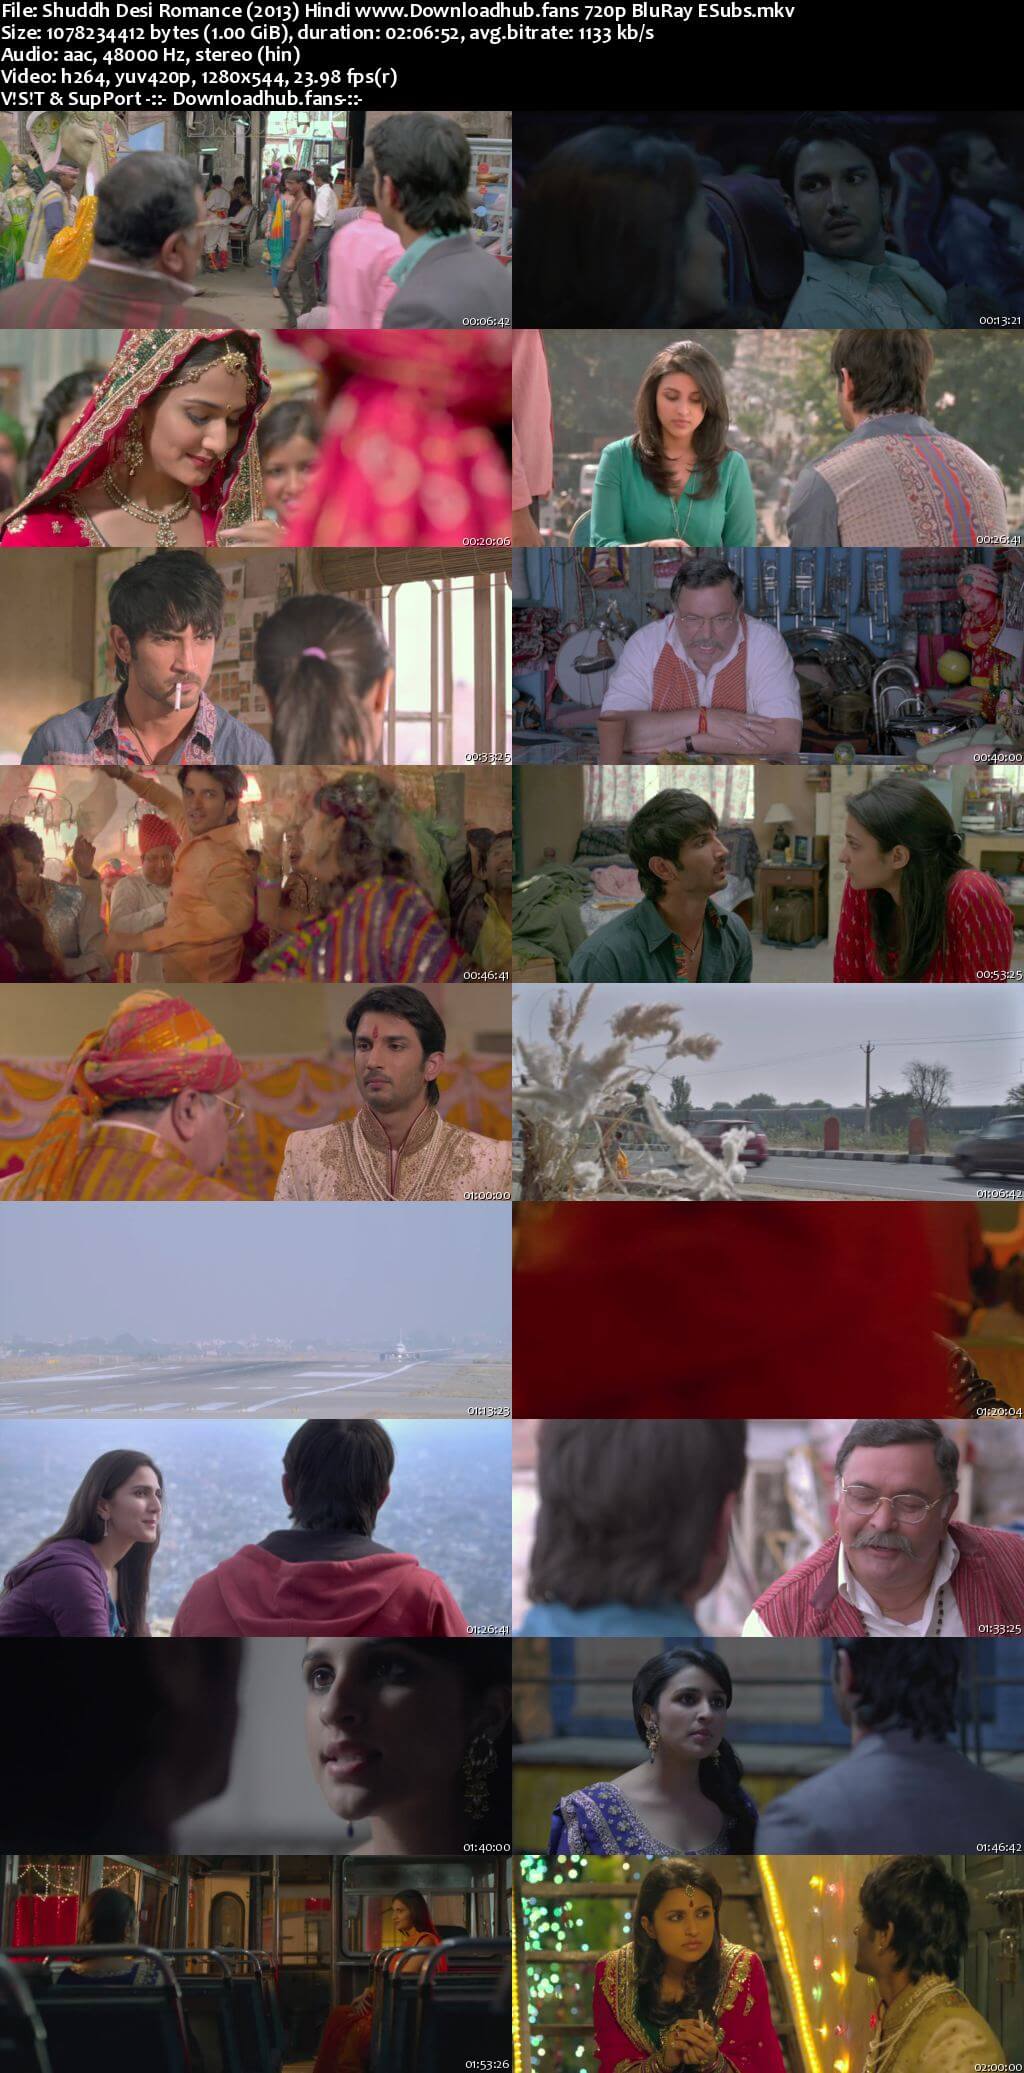 Shuddh Desi Romance 2013 Hindi 720p BluRay ESubs